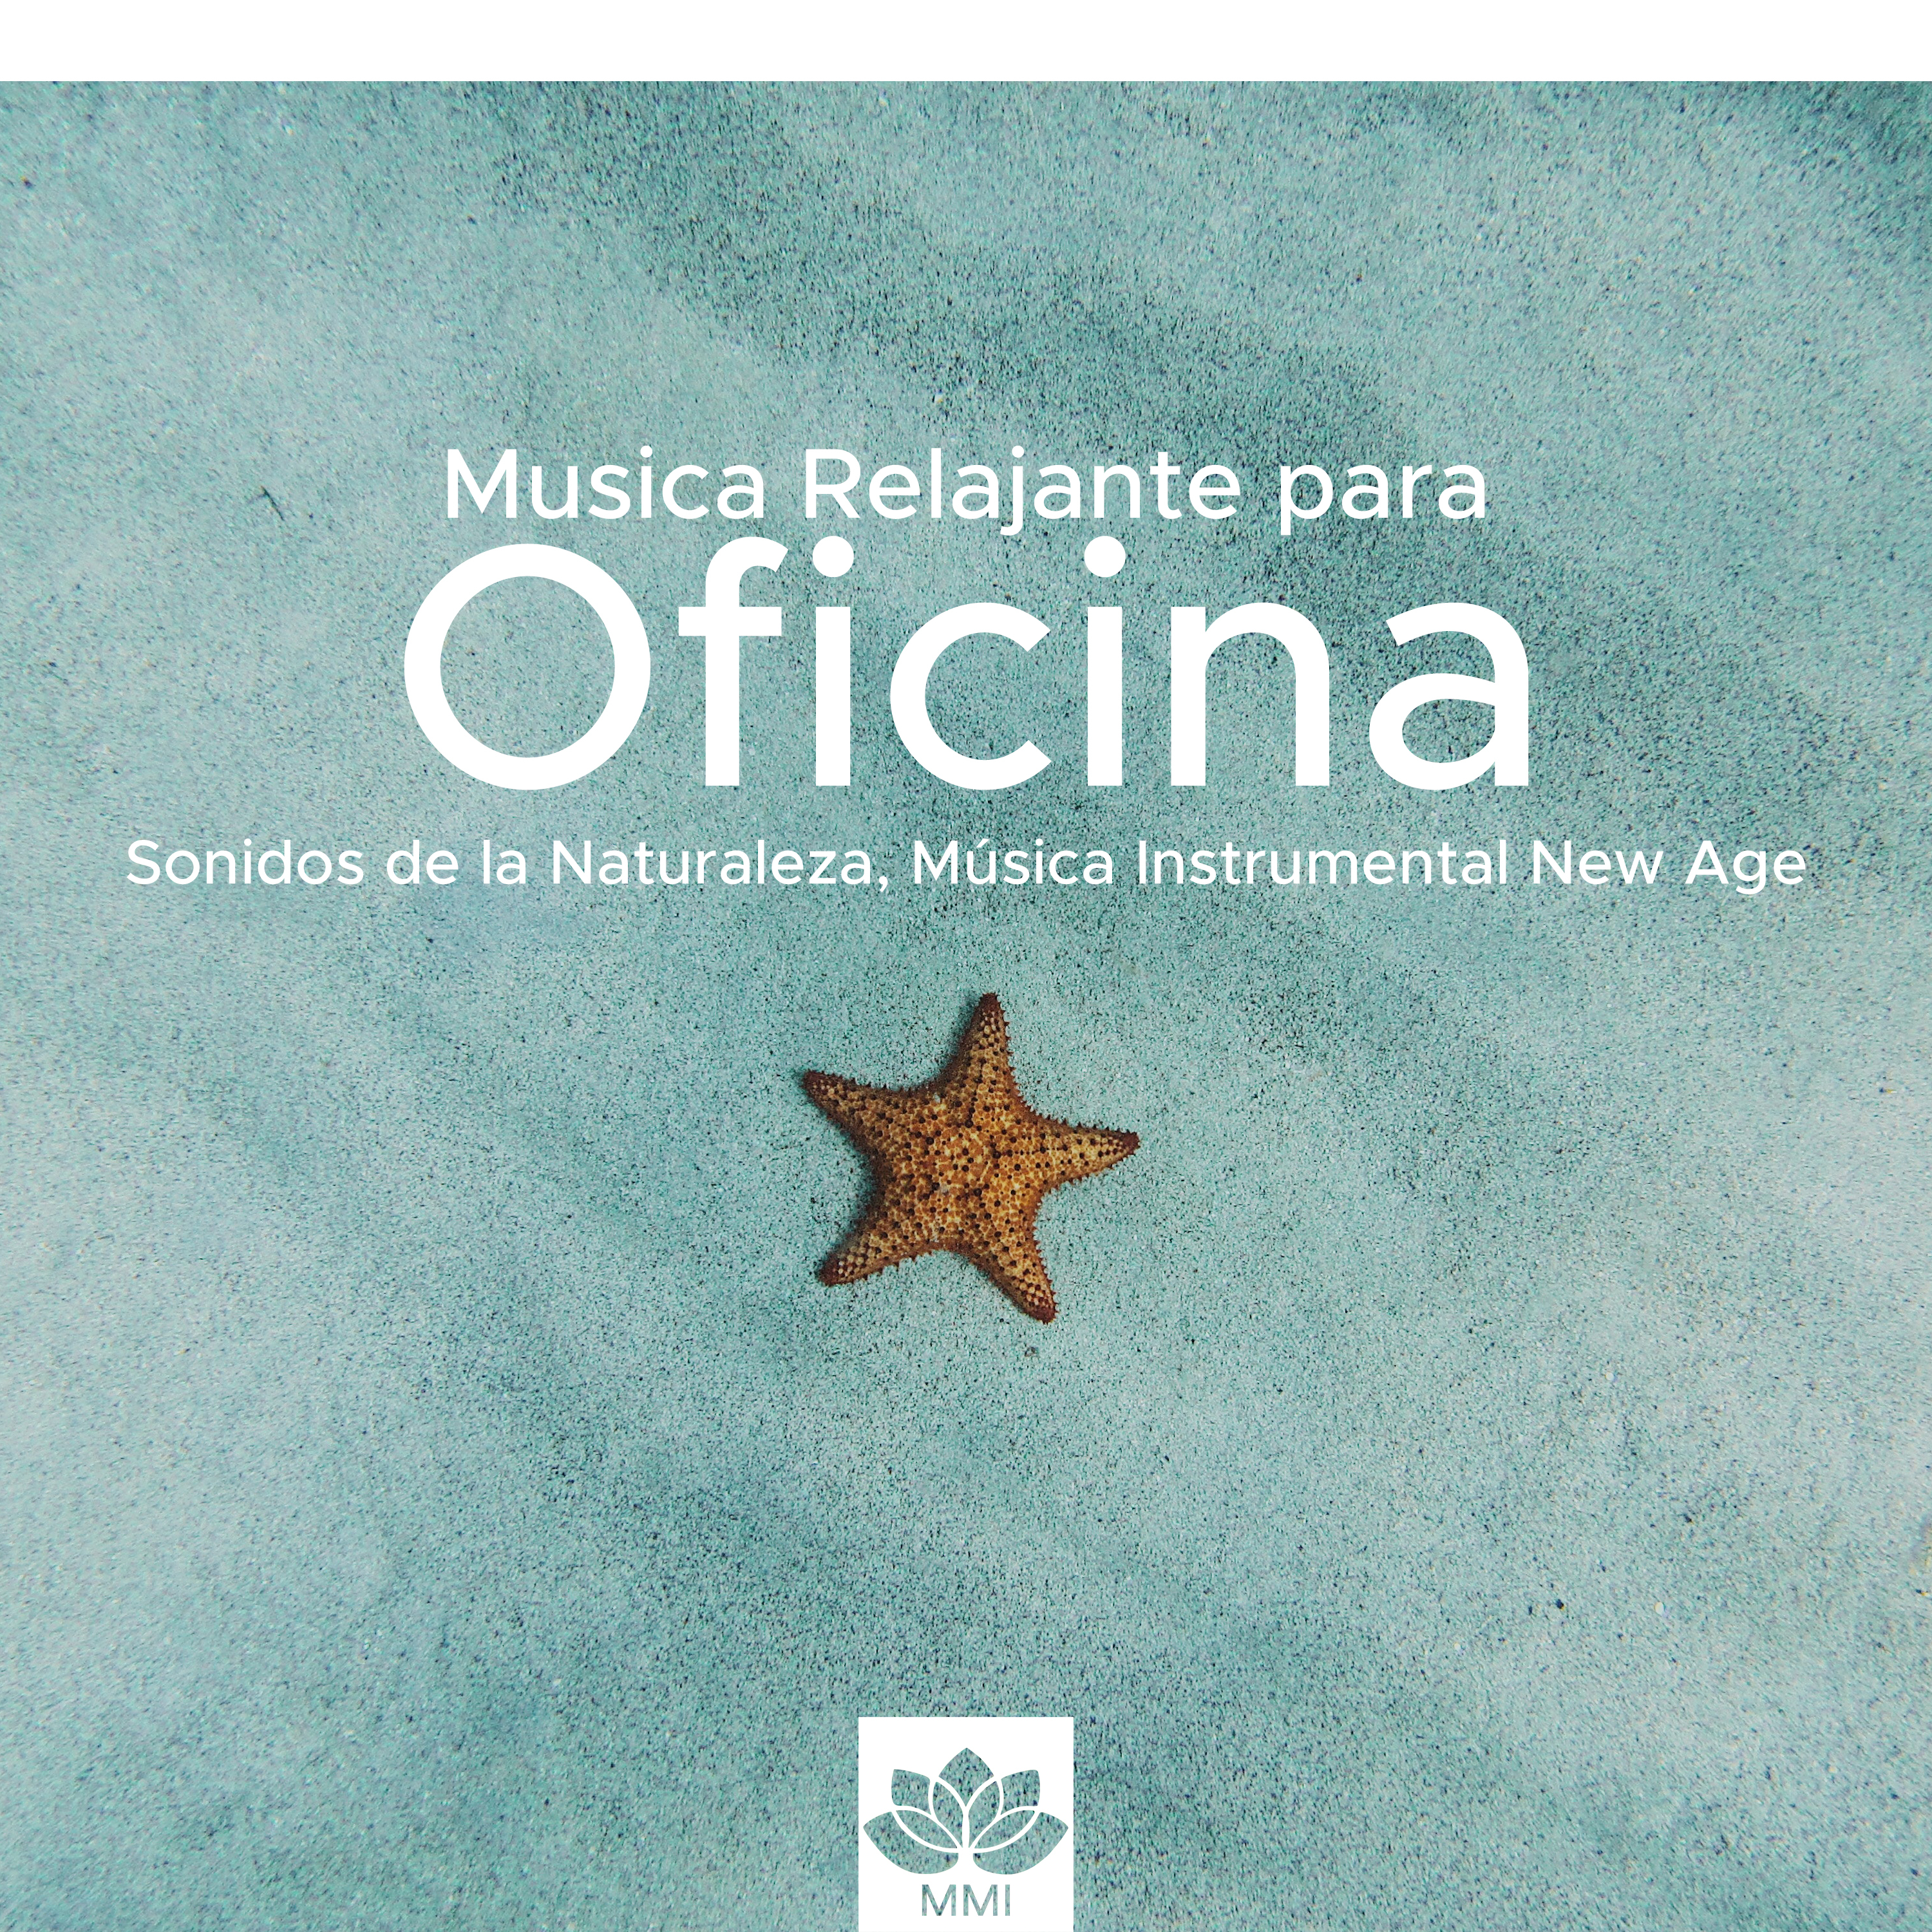 Musica Relajante para Oficina  Sonidos de la Naturaleza, Mu sica Instrumental New Age